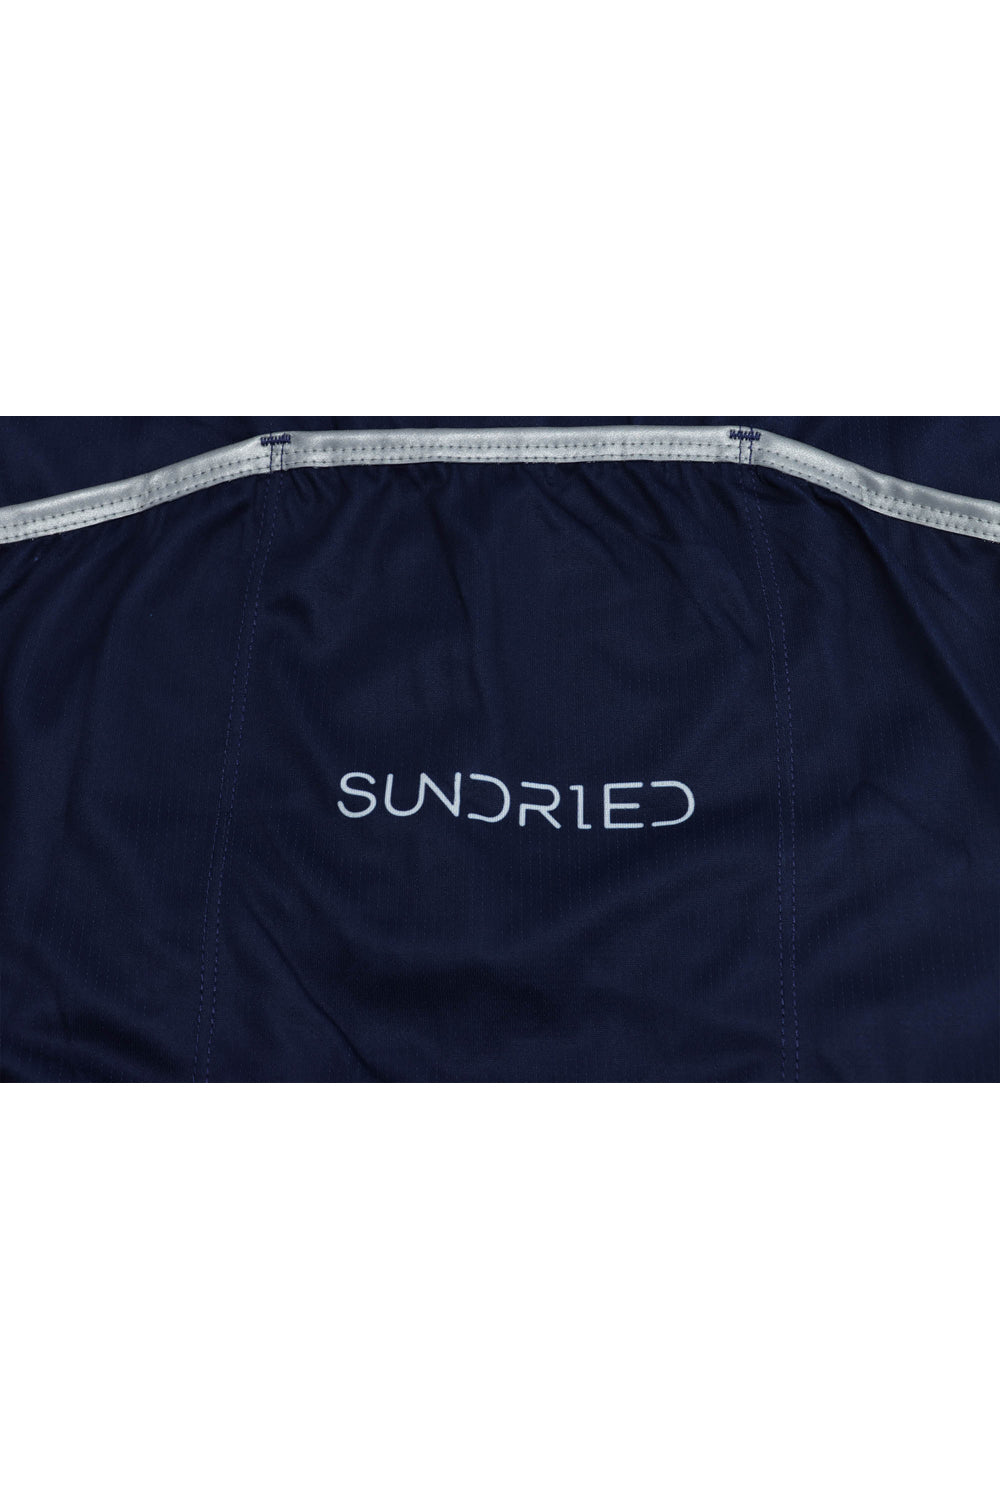 Sundried Retro Men's Short Sleeve Training Cycle Jersey Short Sleeve Jersey Activewear